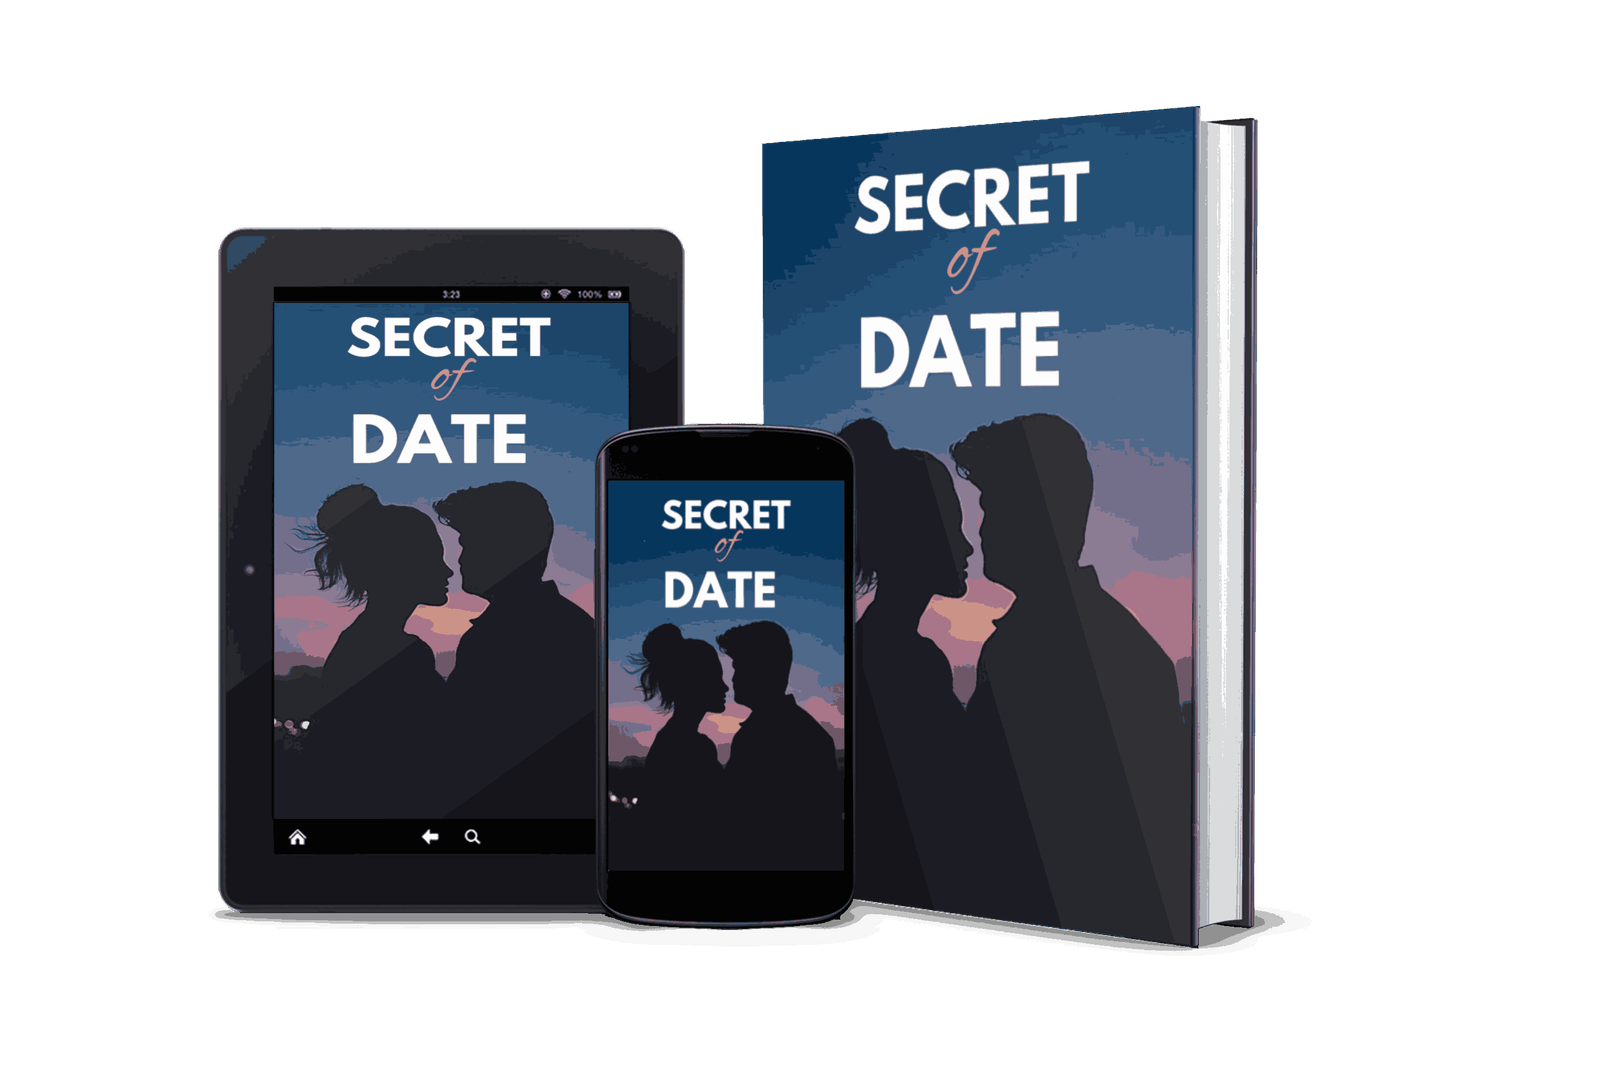 secret of date